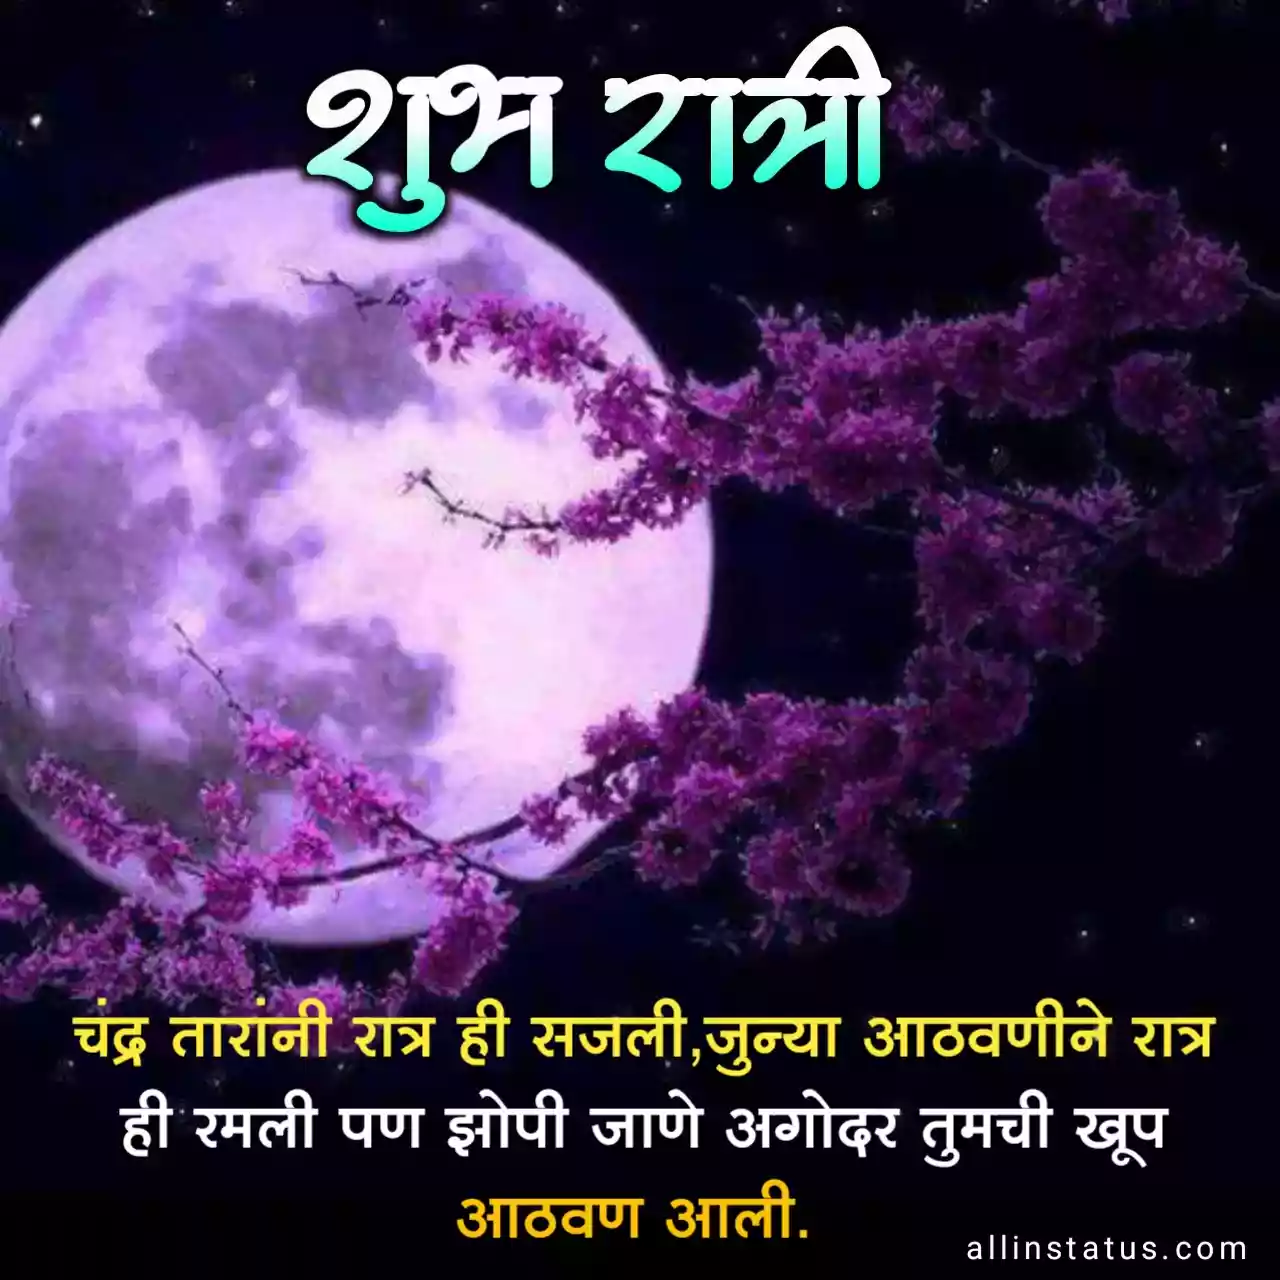 Good night messages marathi